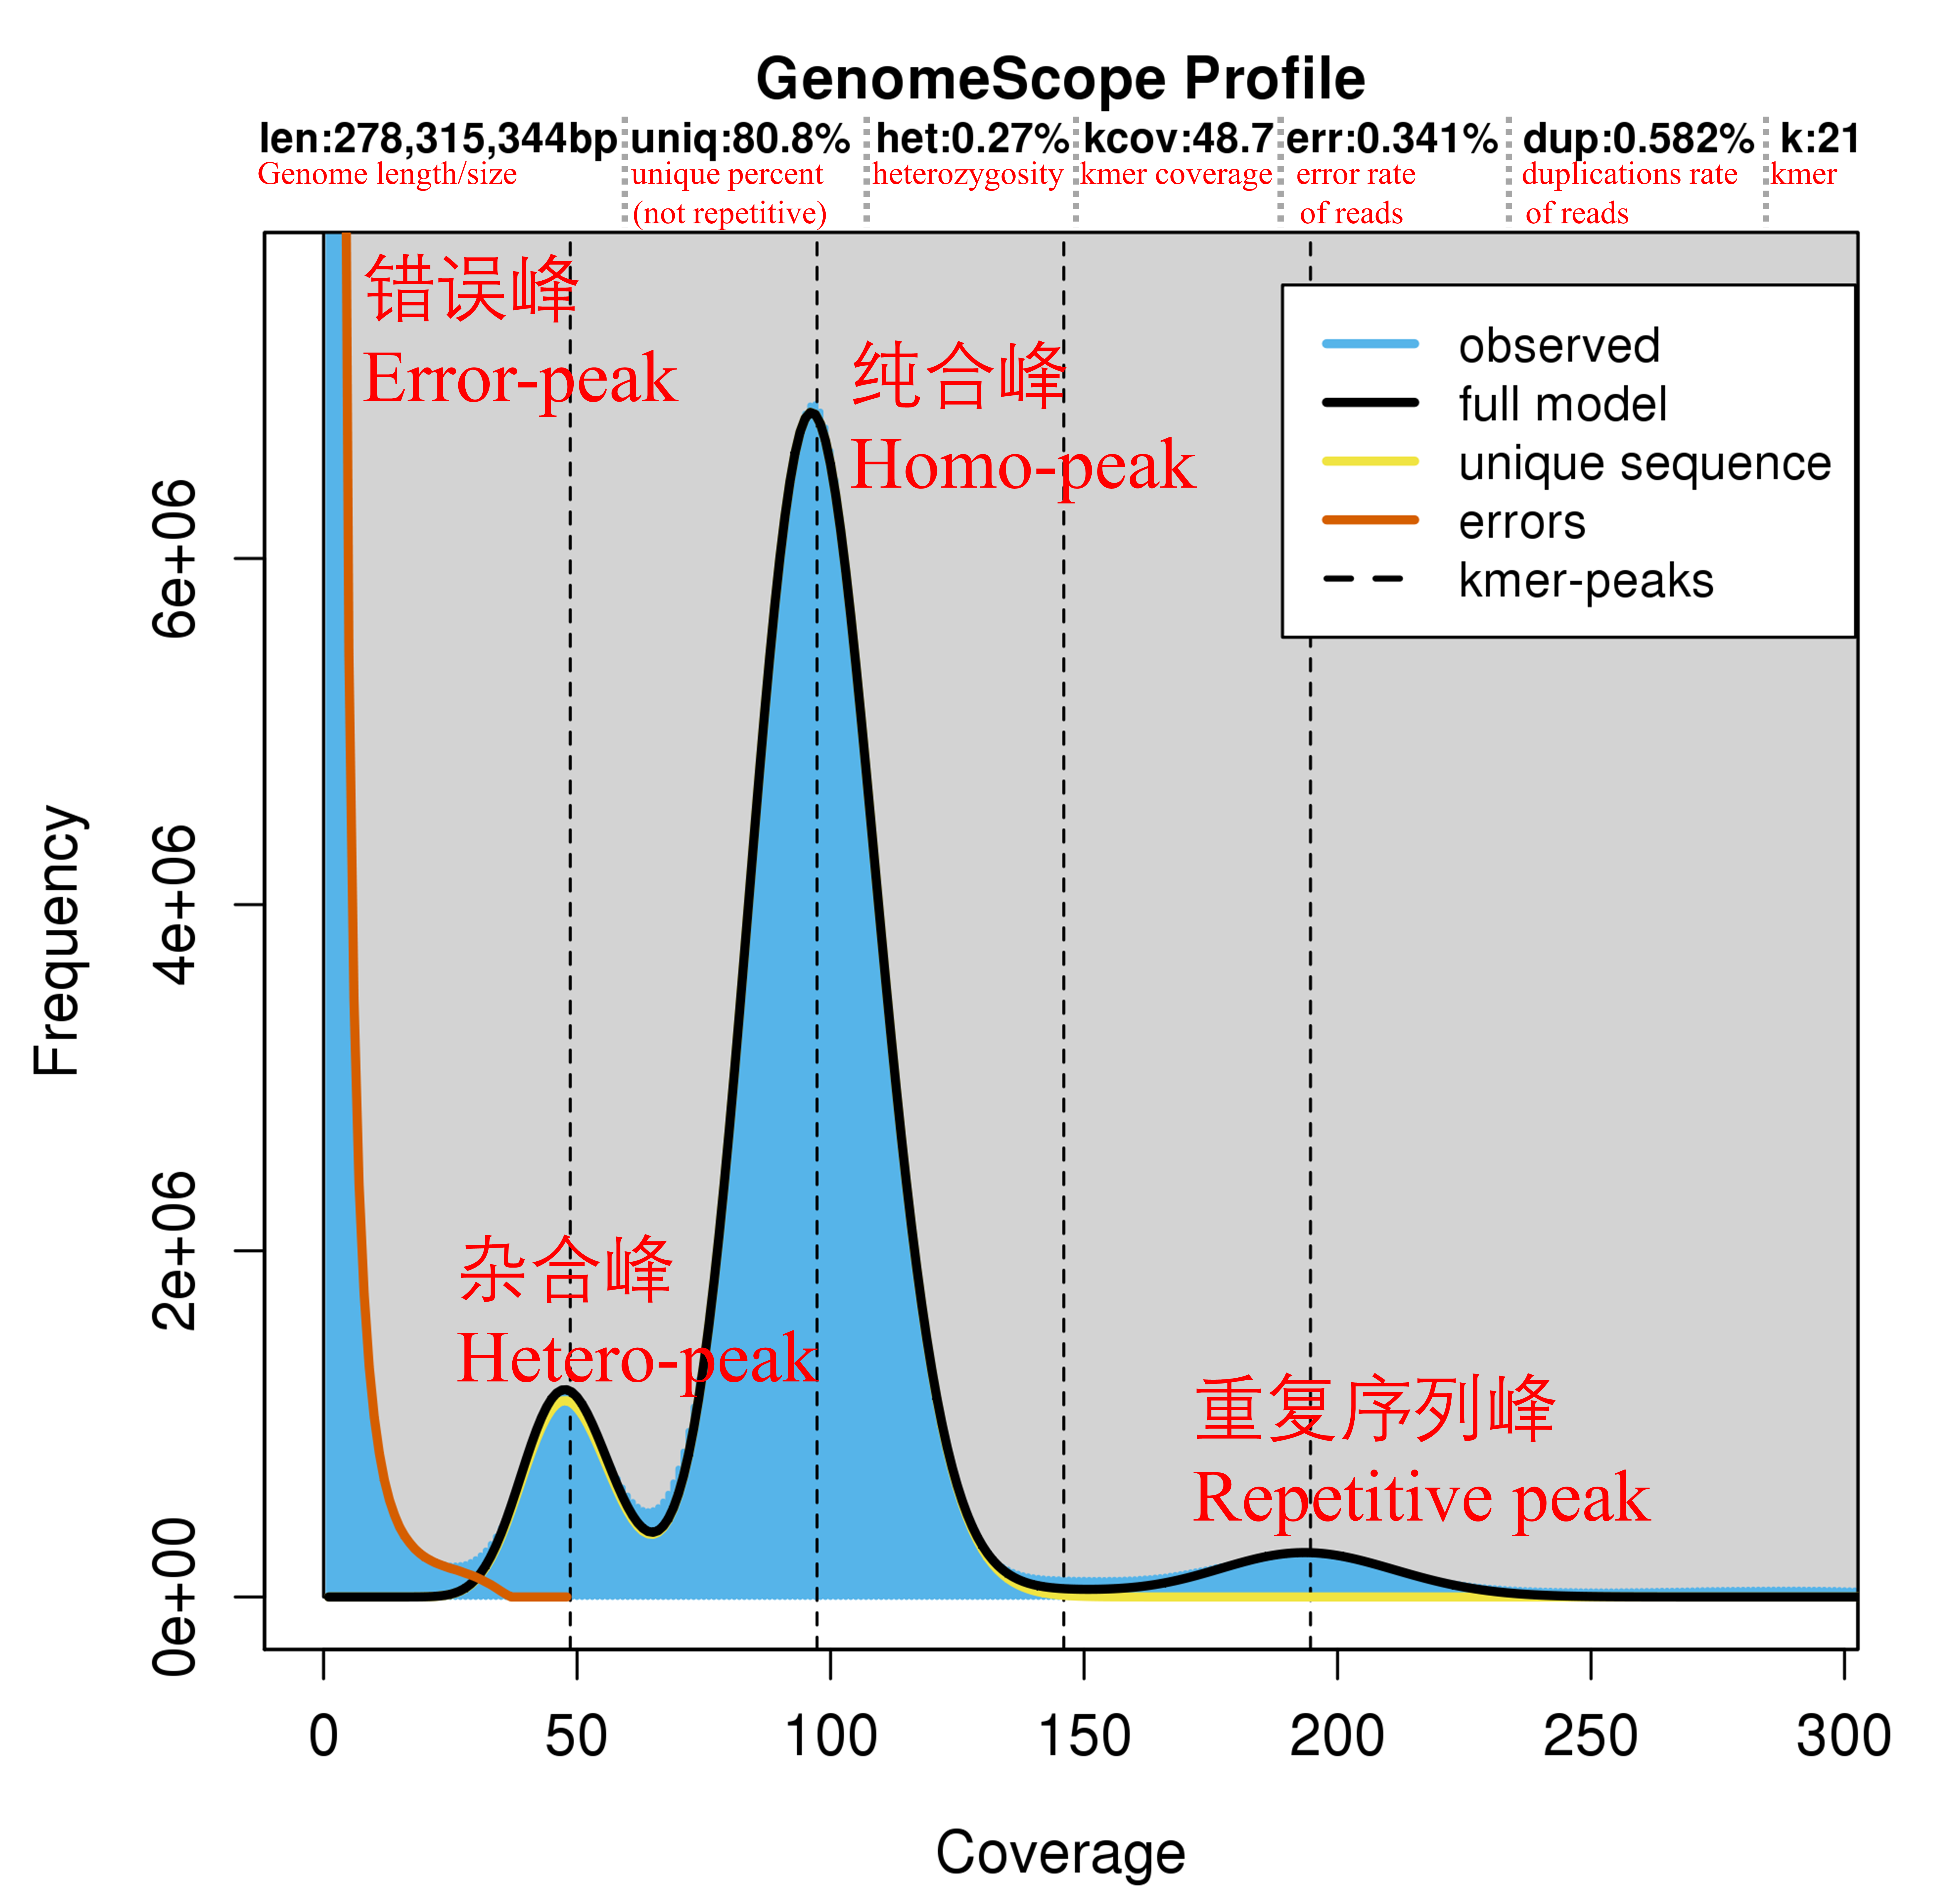 omics_genome.survey_GenomeScope1.0.png?raw=true